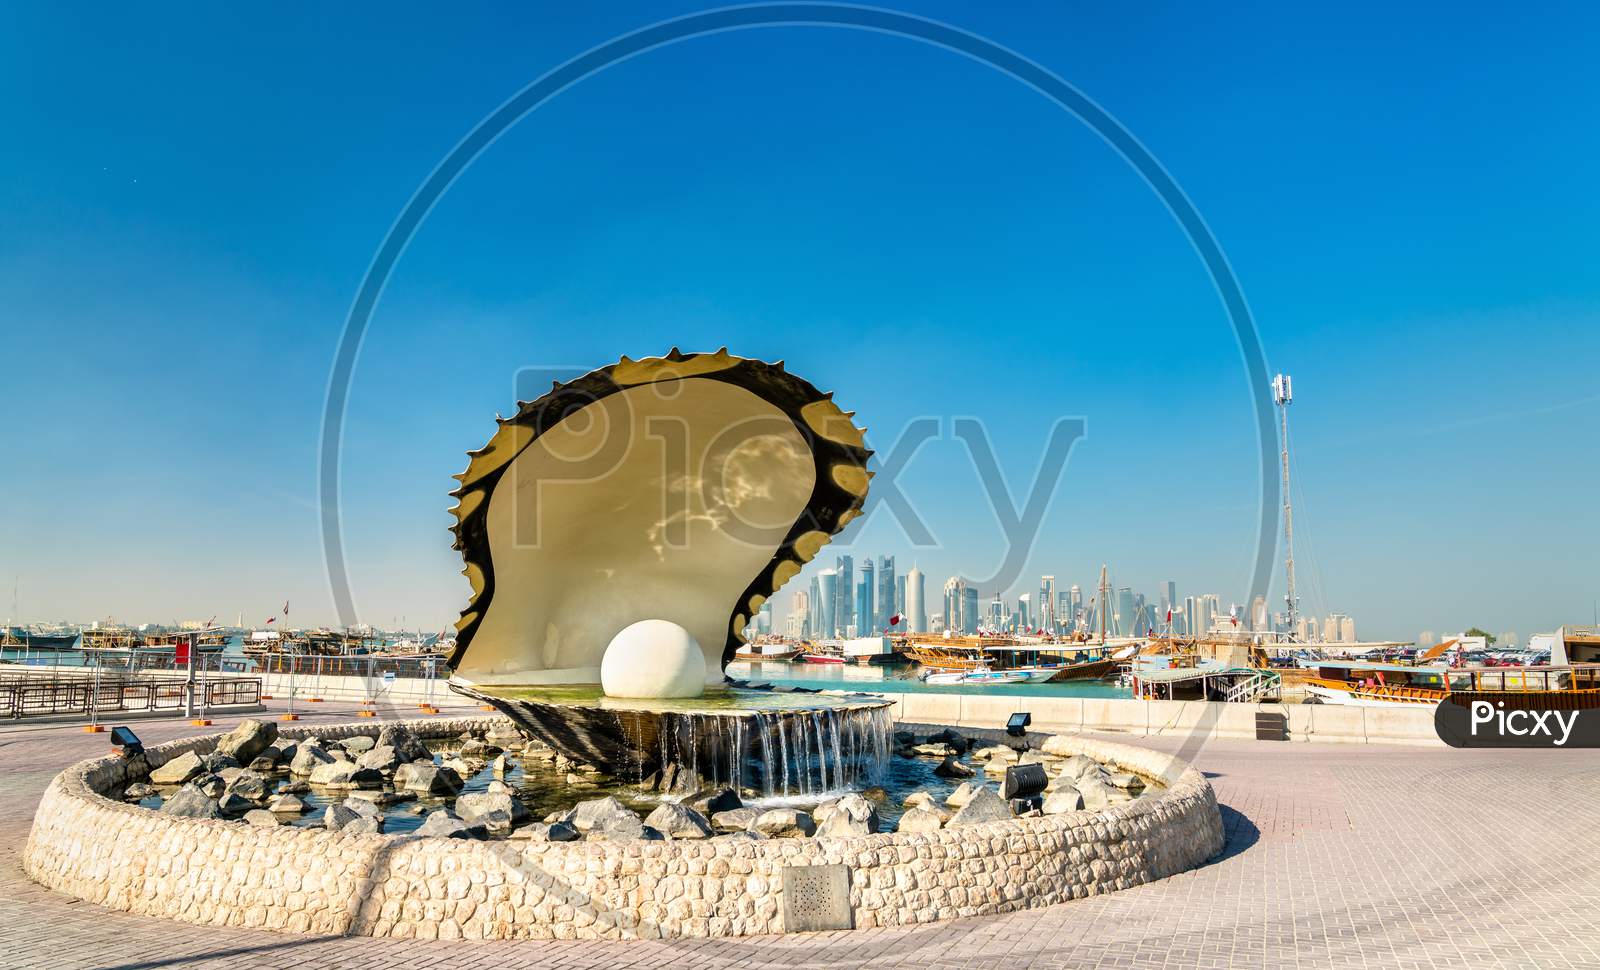 Oyster And Pearl Fountain On Corniche Seaside Promenade In Doha, Qatar